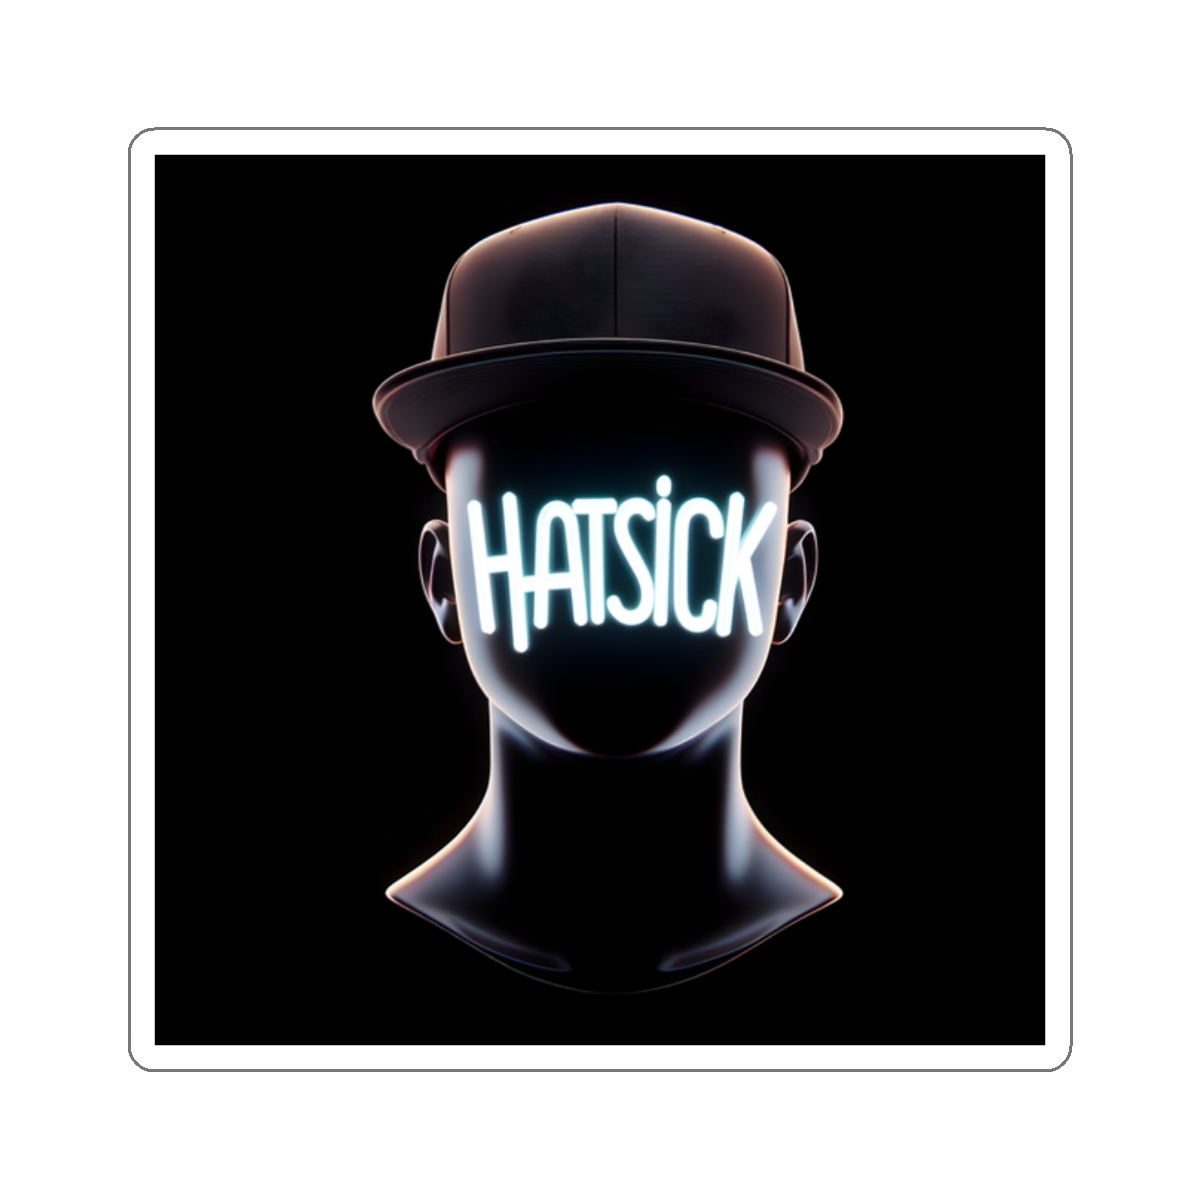 HatSick logo Sticker